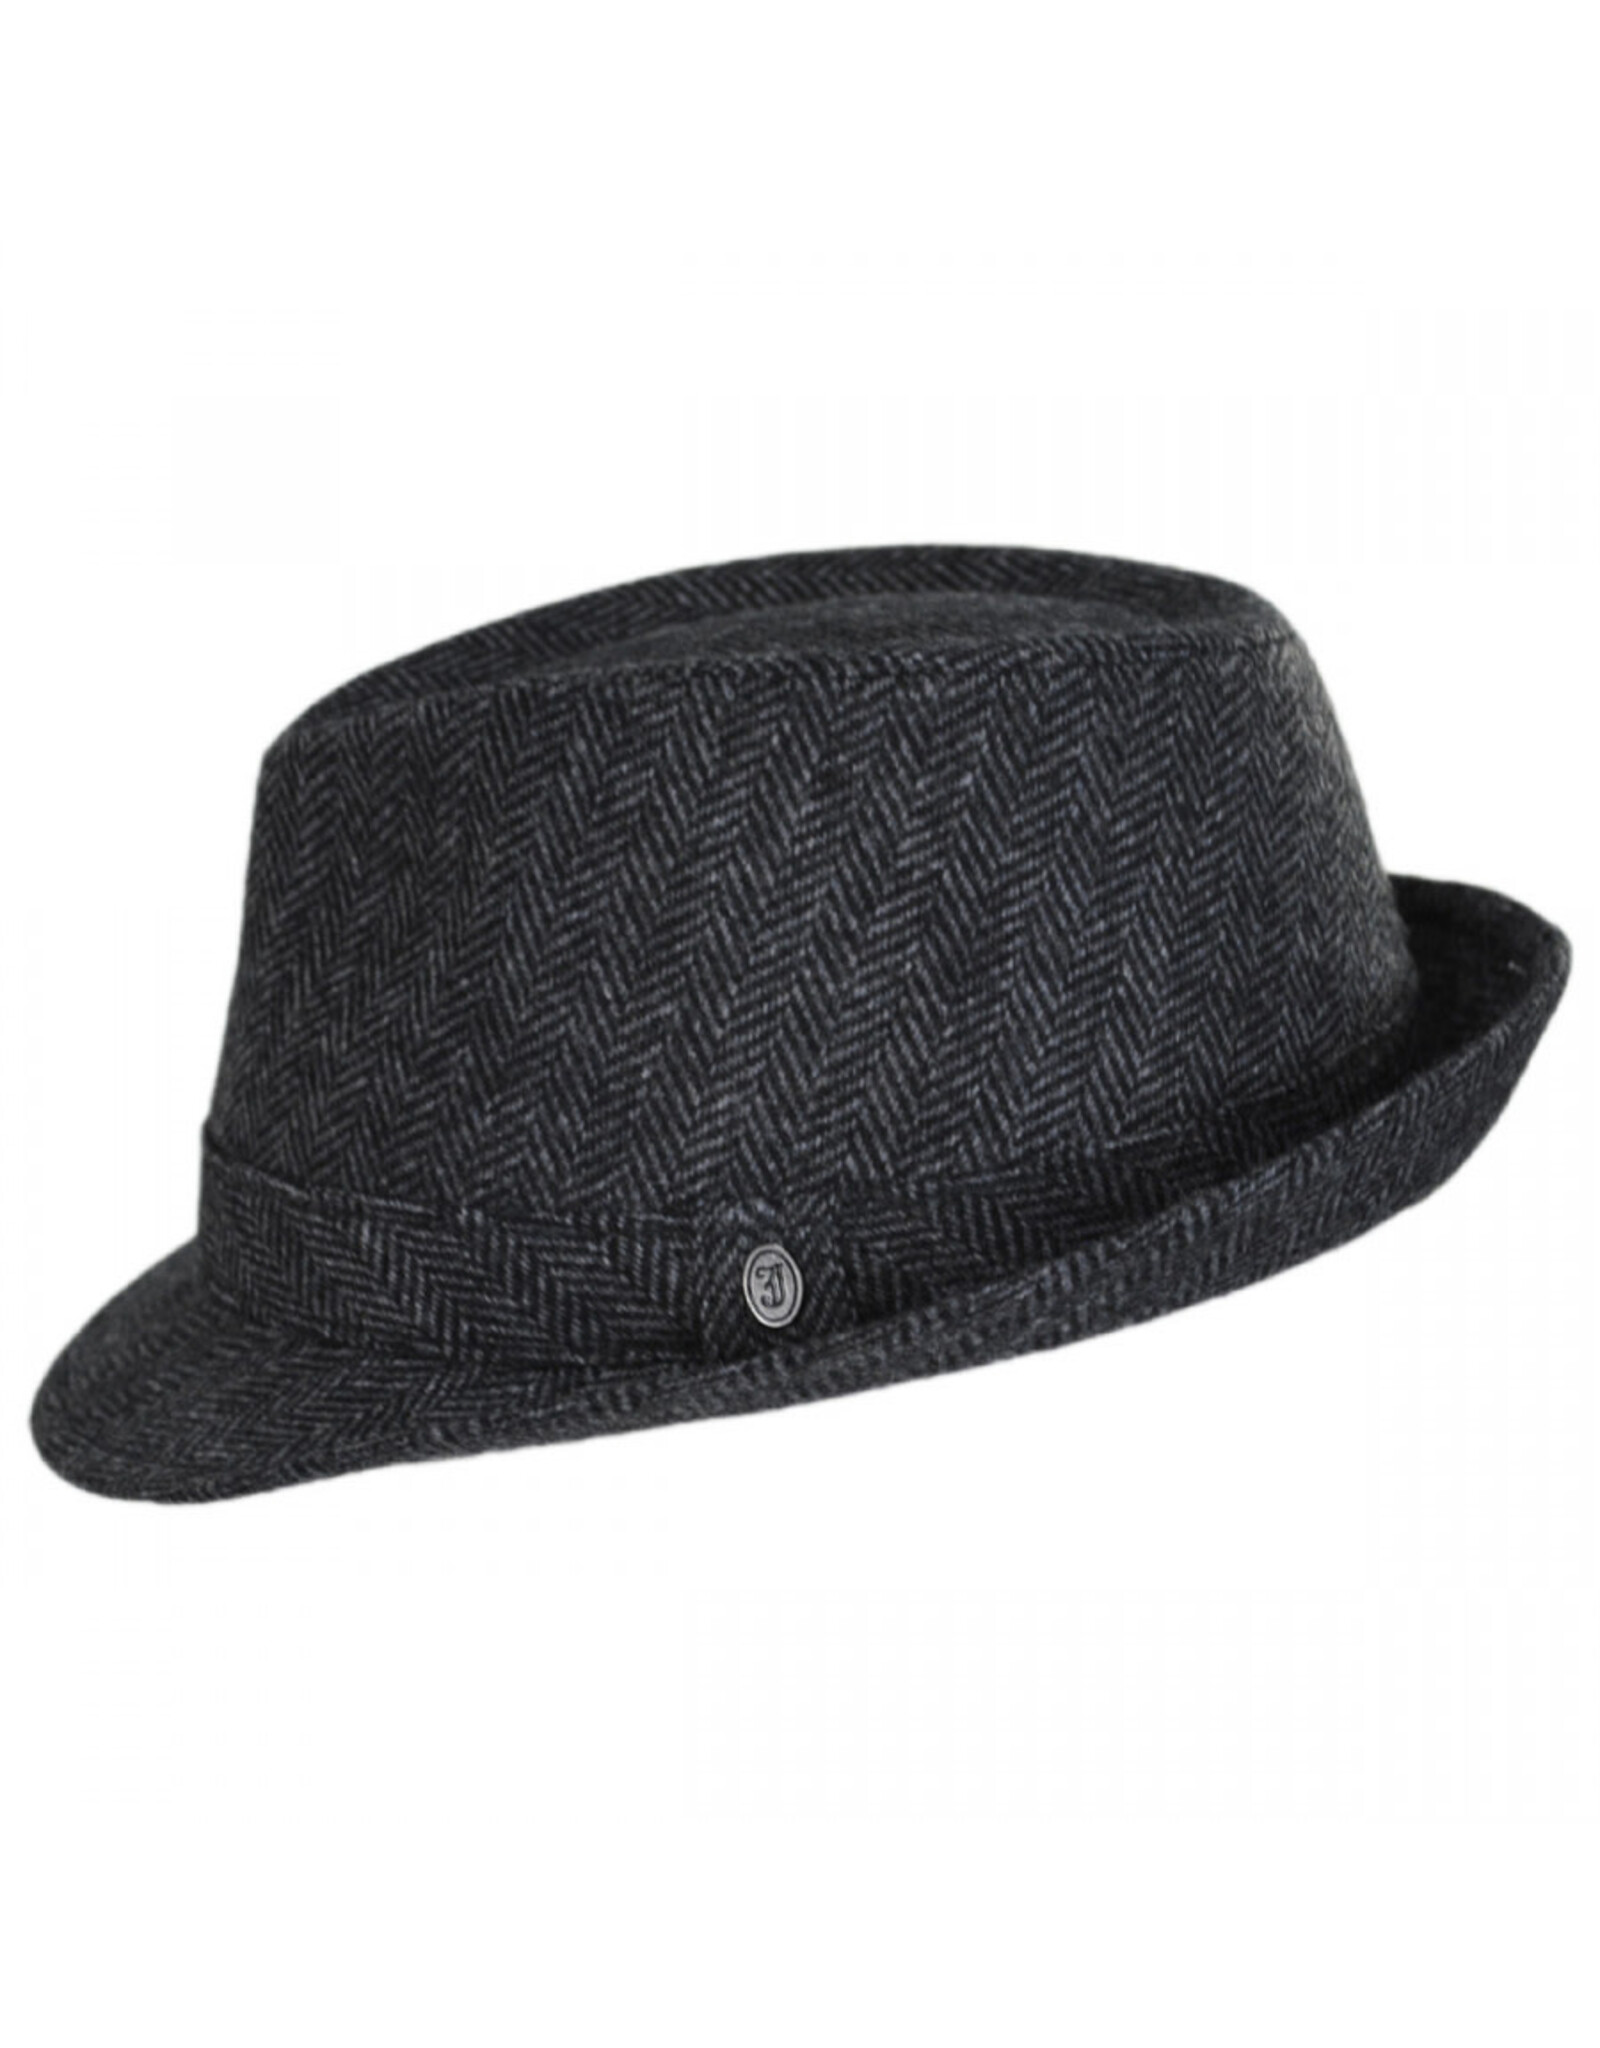 Jaxon Hats, Inc. Lg Herringbone Wool Trilby Fedora Hat